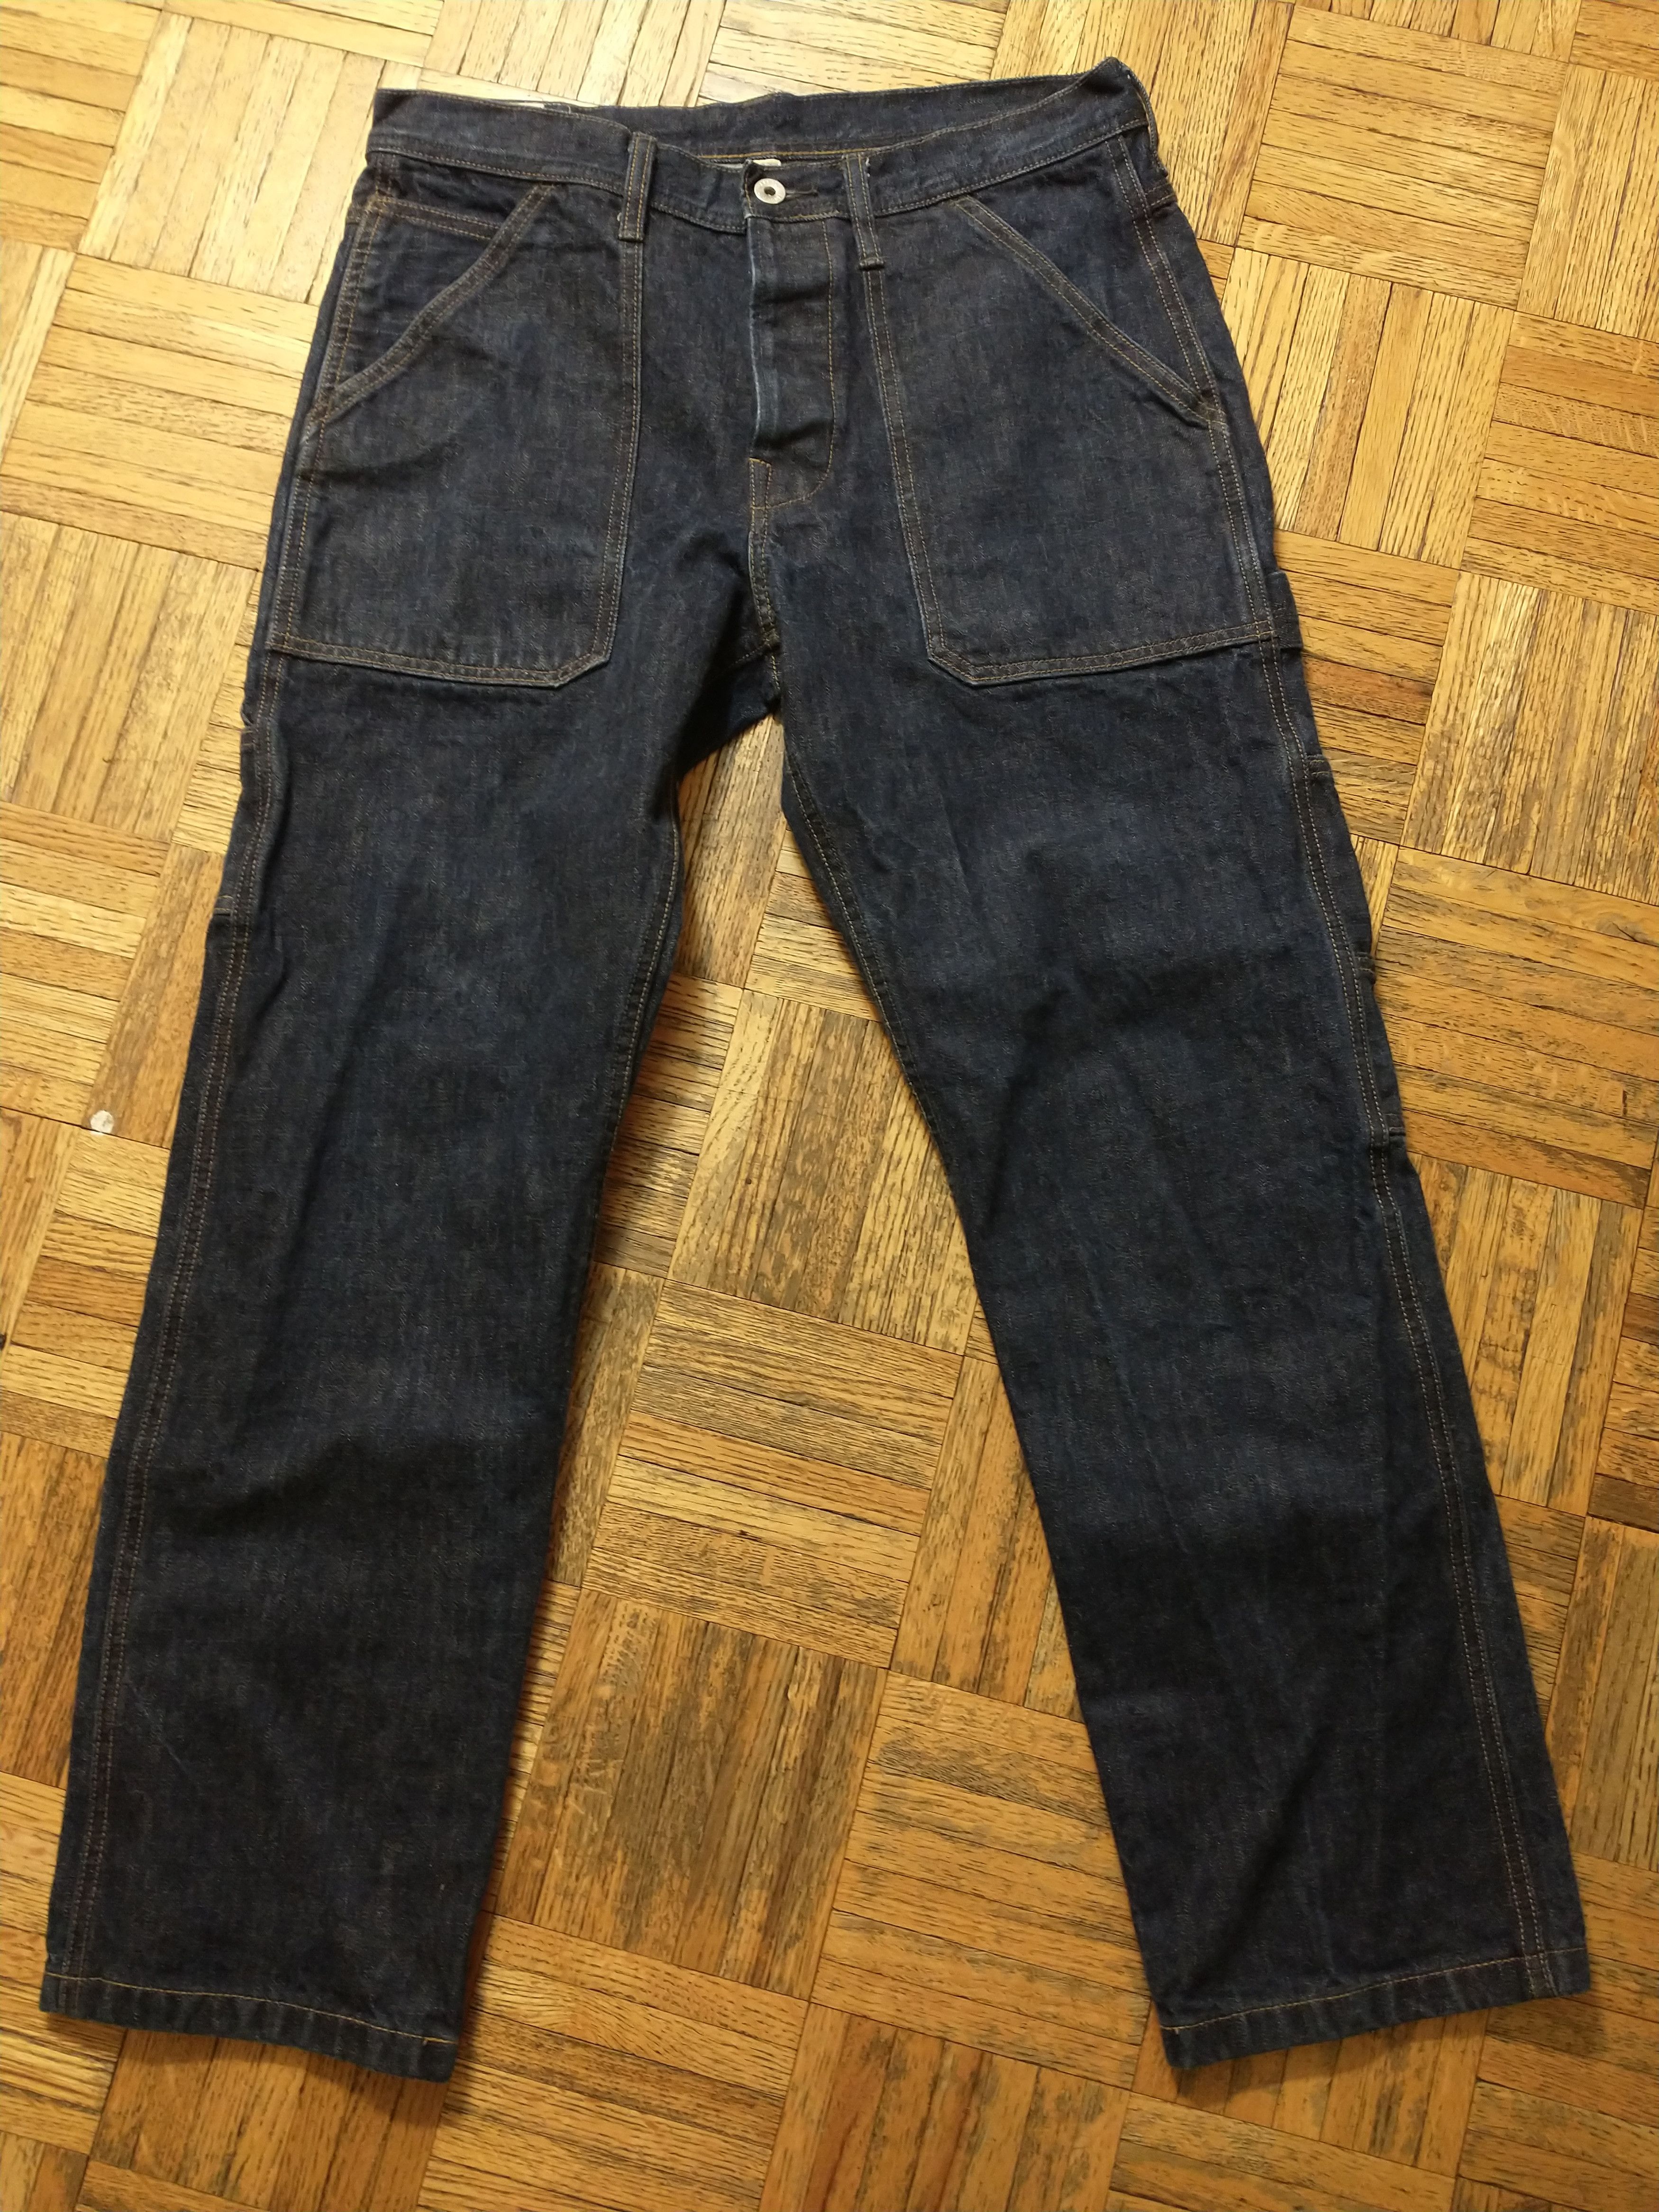 Wallace & Barnes Carpenter jeans | Grailed